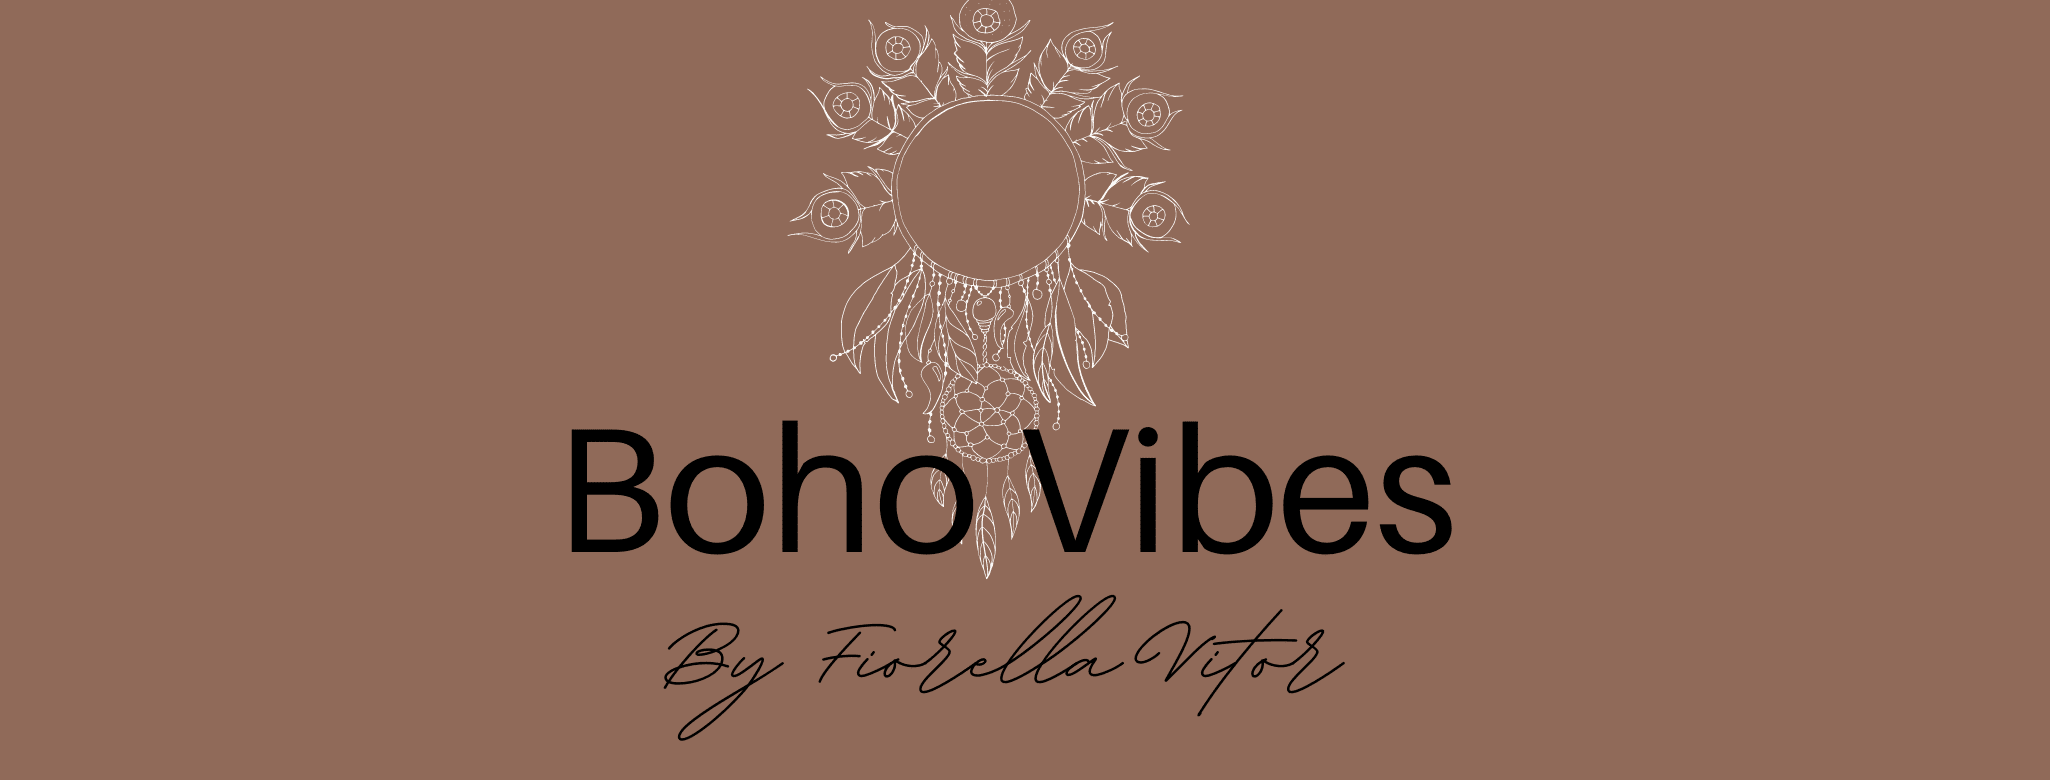 Boho Vibes By Fiorella Vitor